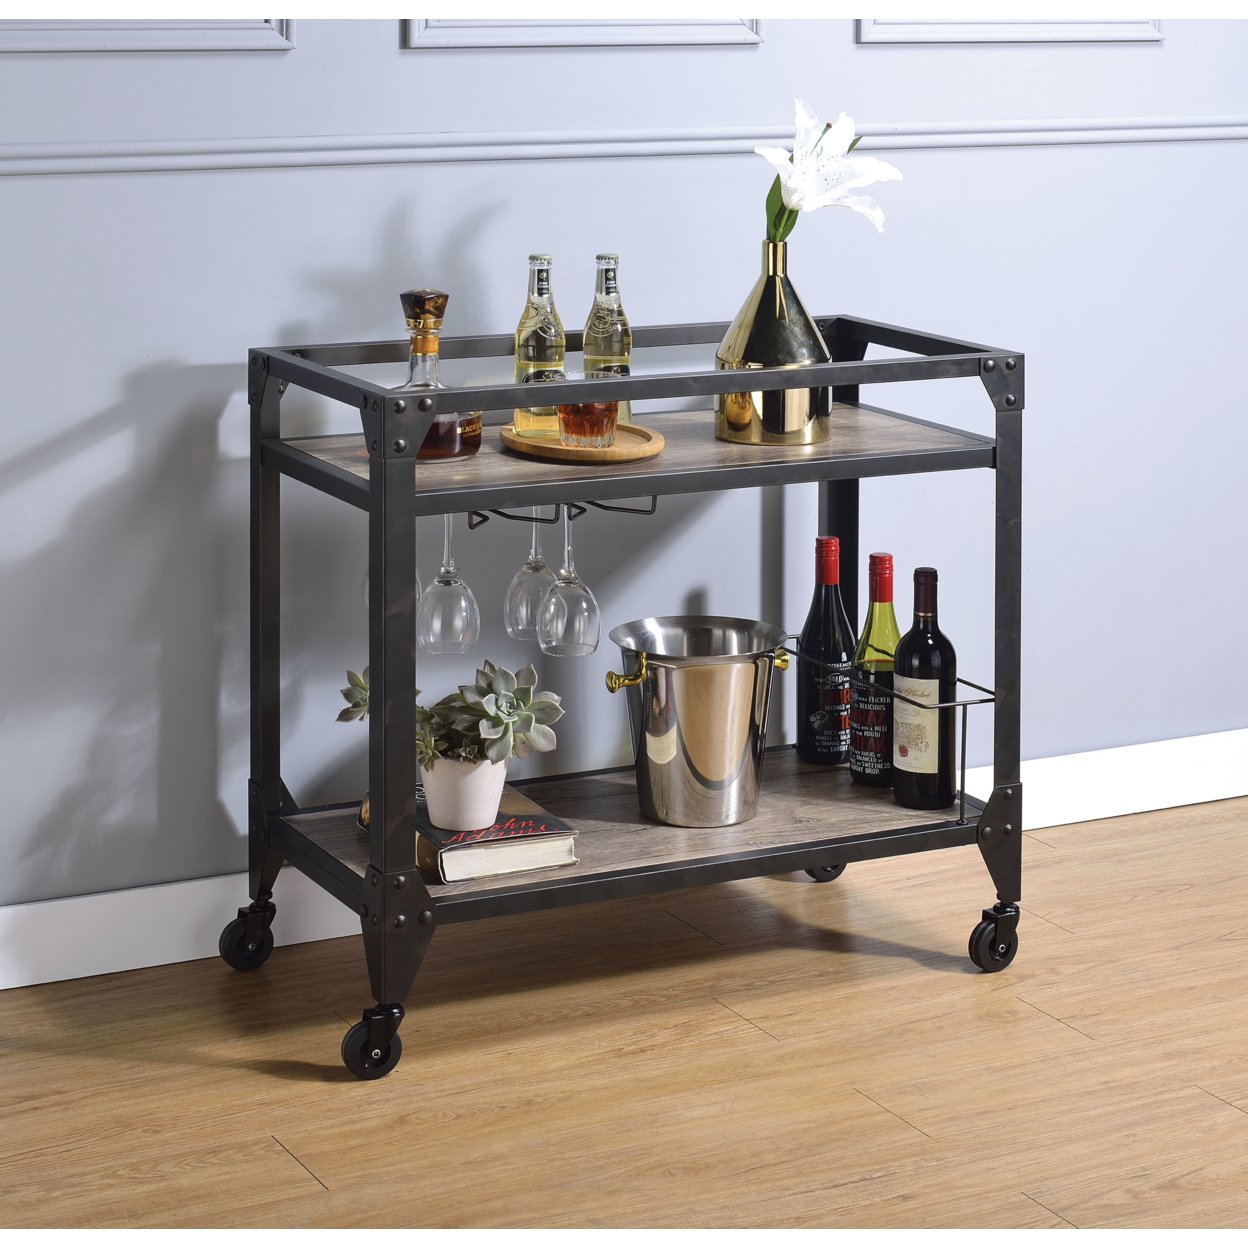 Metal Framed Serving Cart With Wooden Shelves With Wine Bottle Holder, Brown And Gray- Saltoro Sherpi